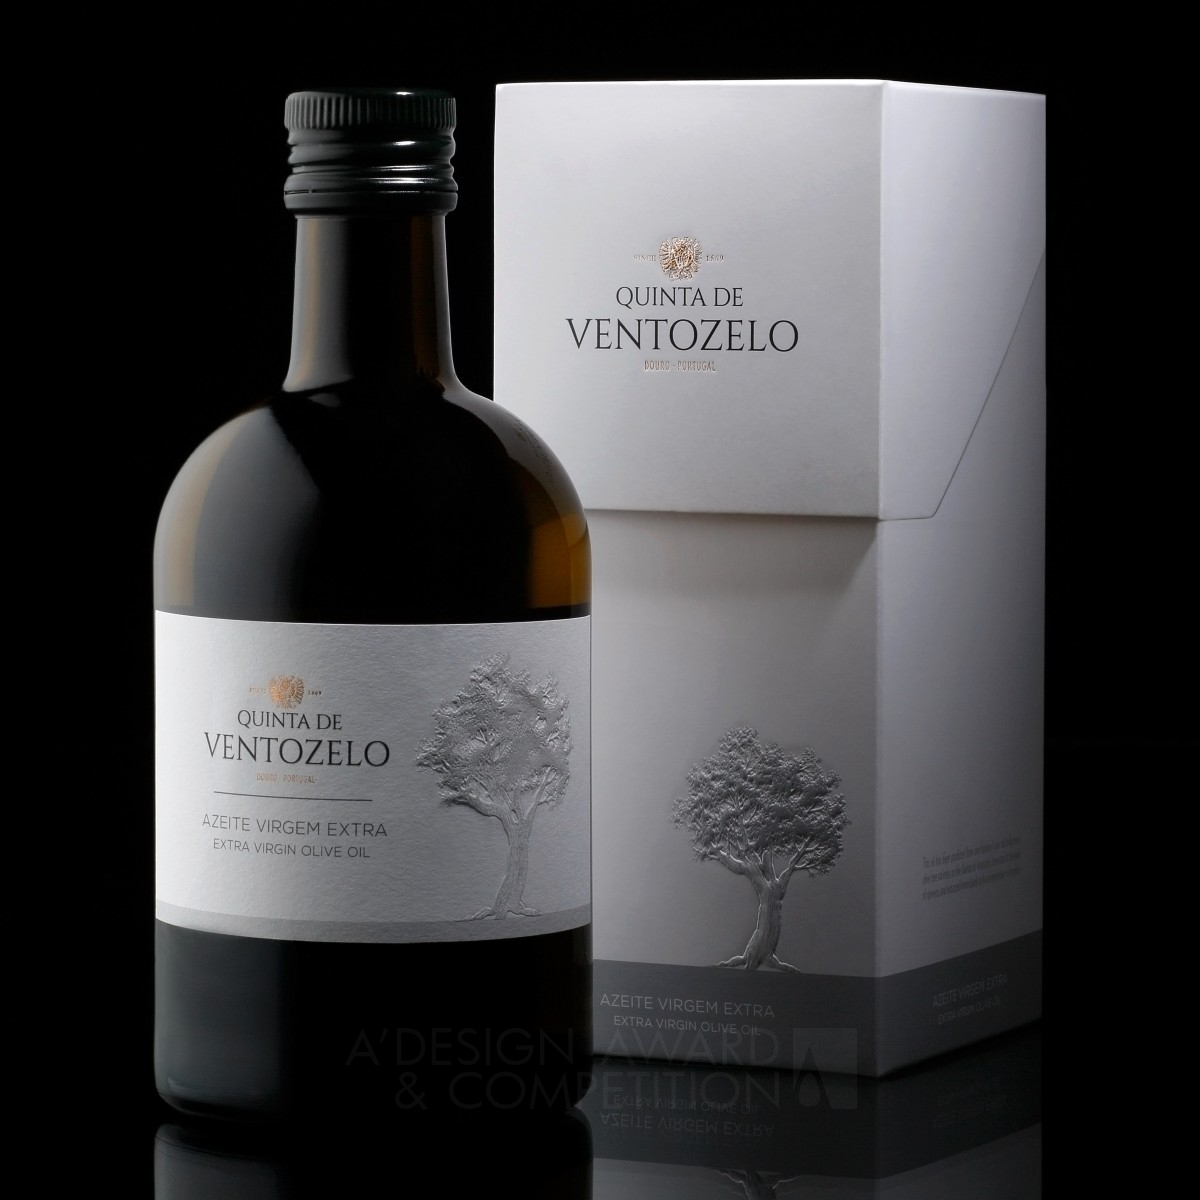 Quinta de Ventozelo olive oil Packaging by Omdesign